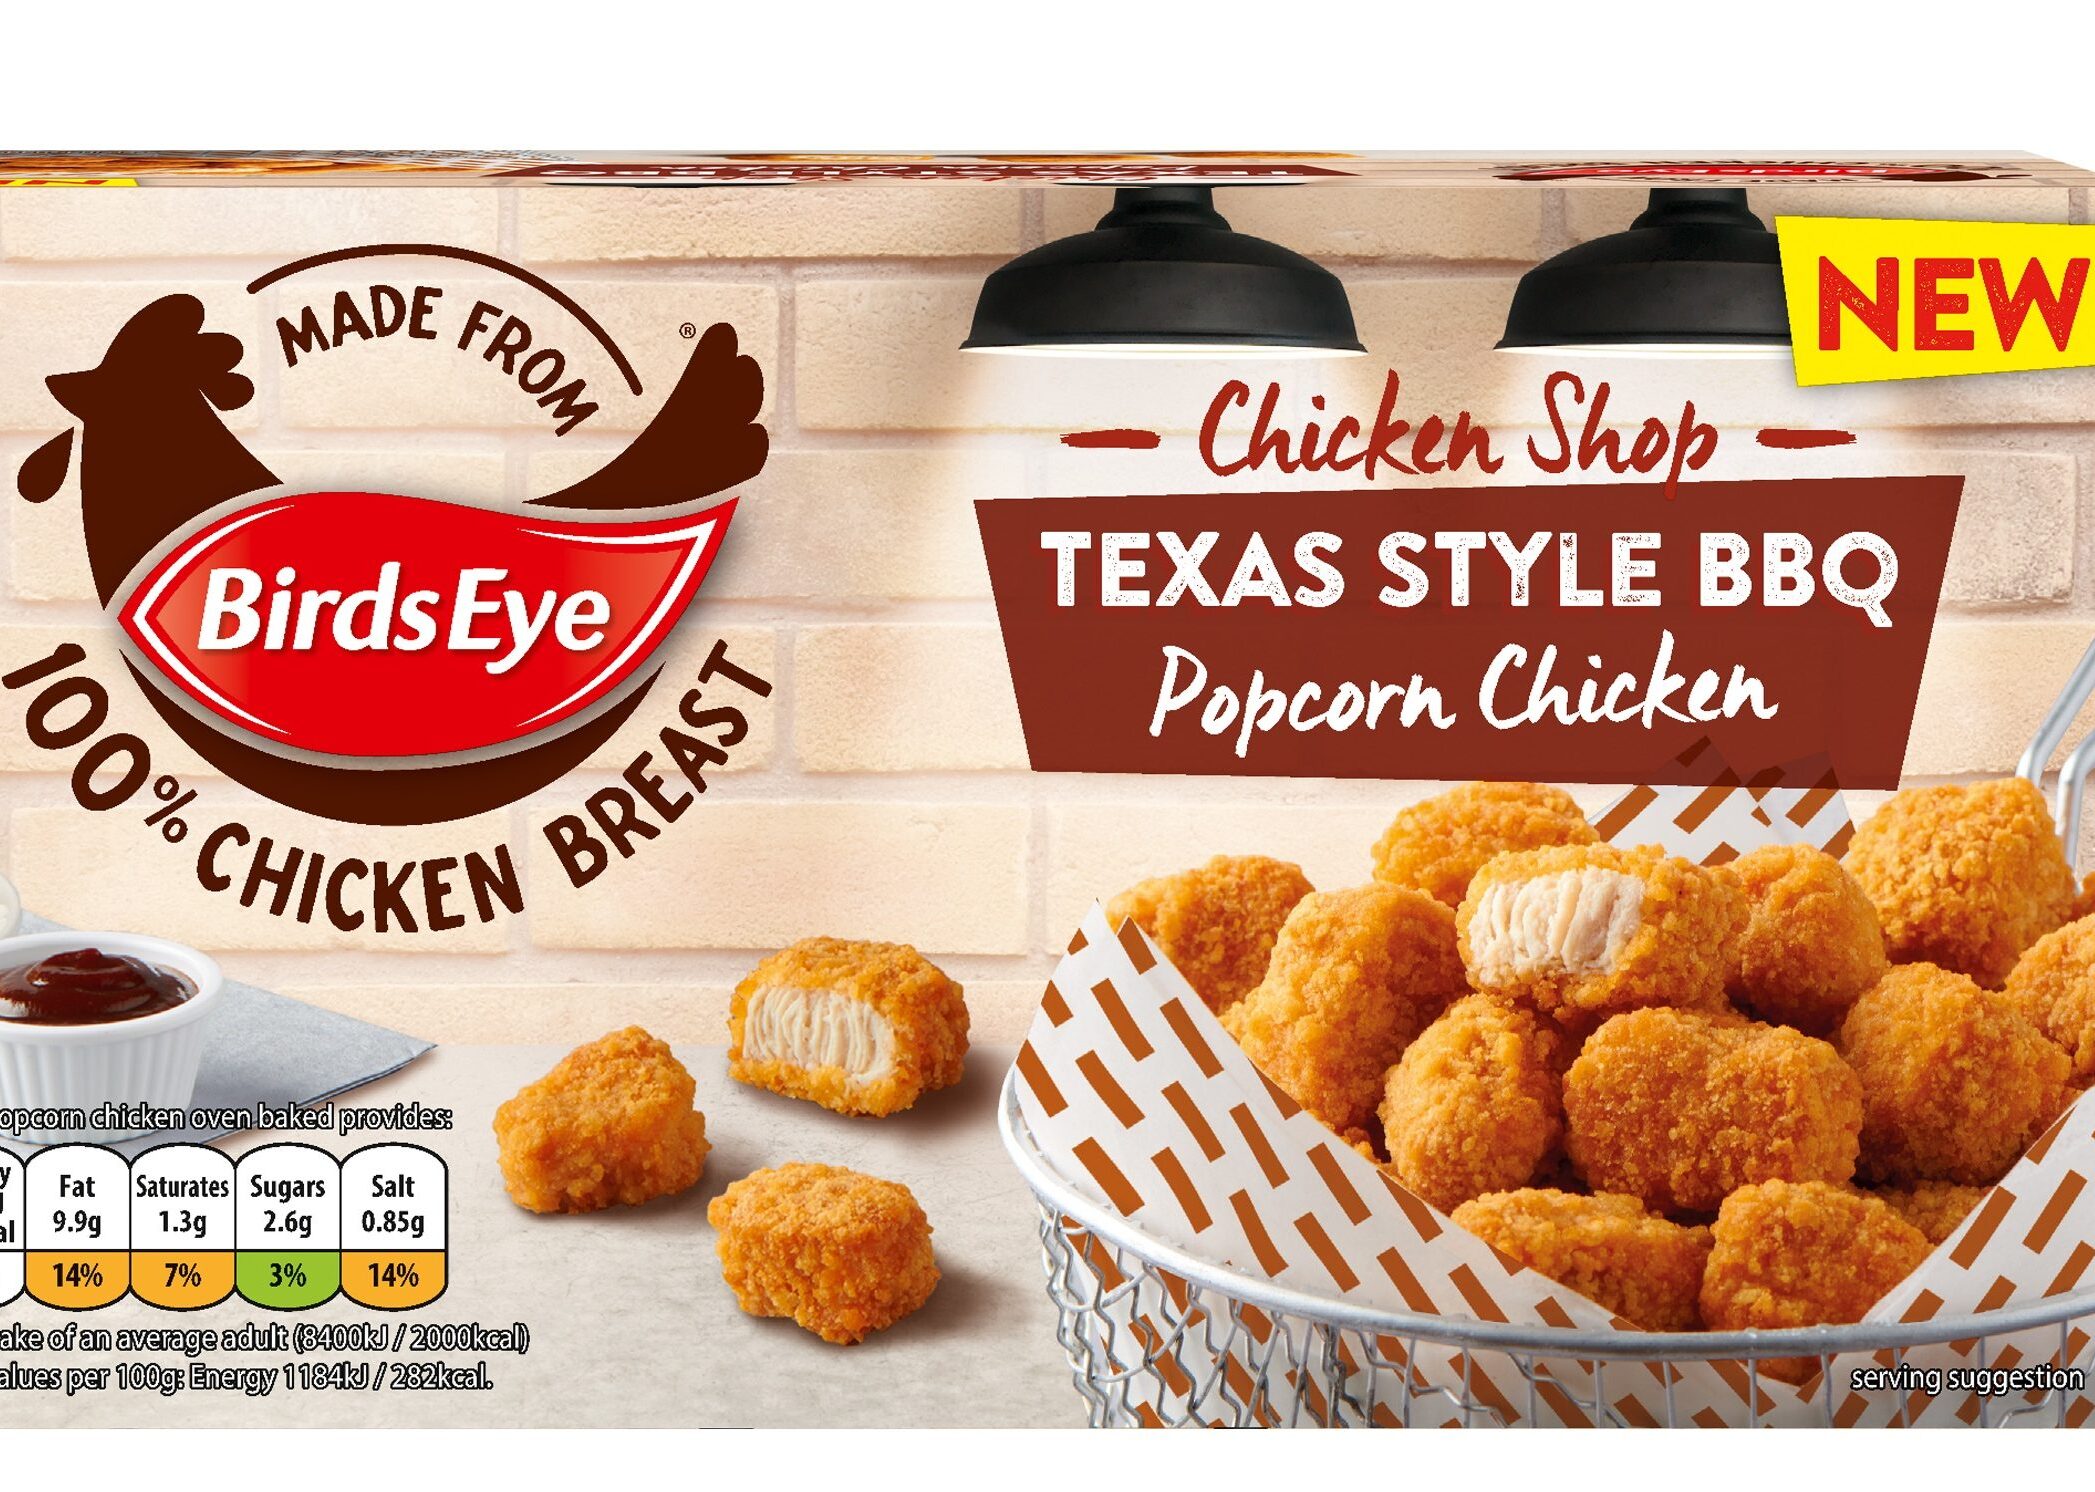 https://www.just-food.com/wp-content/uploads/sites/28/2021/08/Birds-Eye-Chicken-Shop-Texas-Style-BBQ-Popcorn-Chicken-325g-500011612606-e1652358604577.jpg